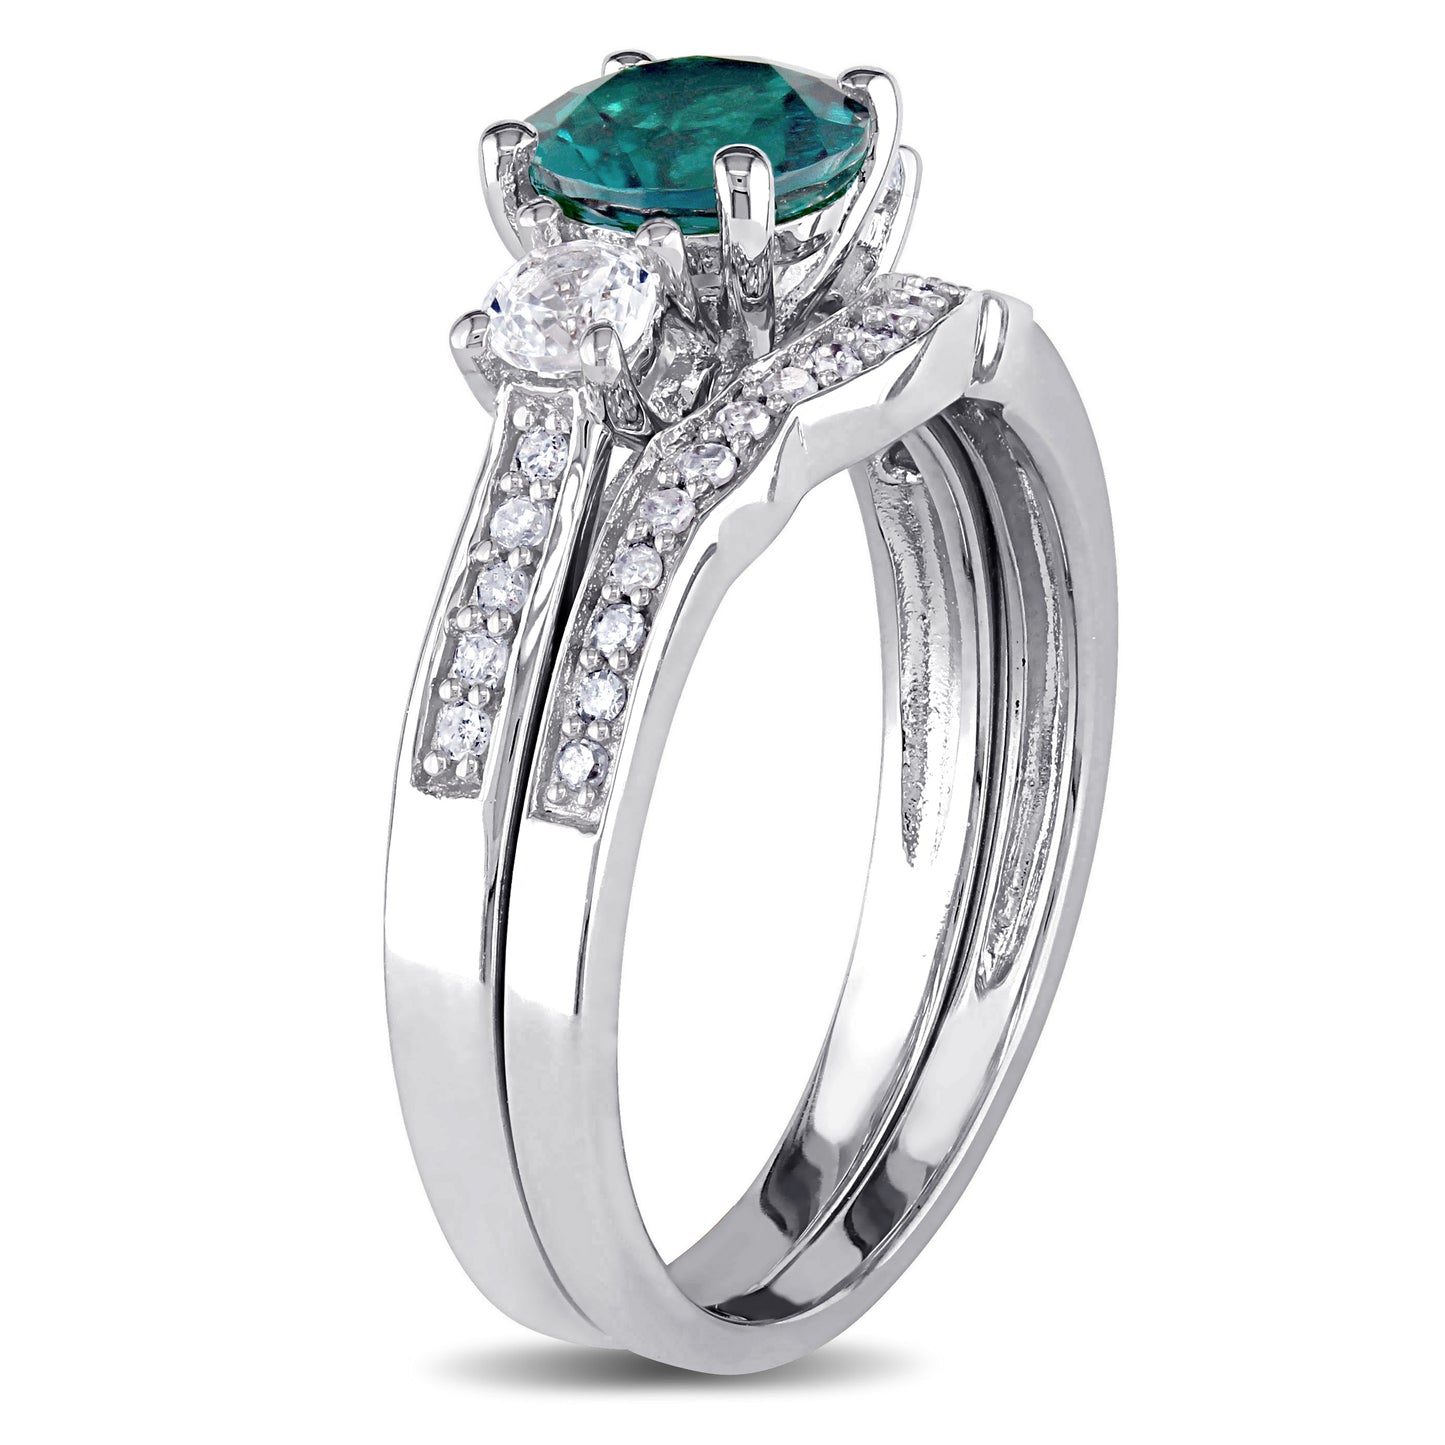 Created Emerald & White Sapphire & Diamond Wedding Set Ring in 10k White